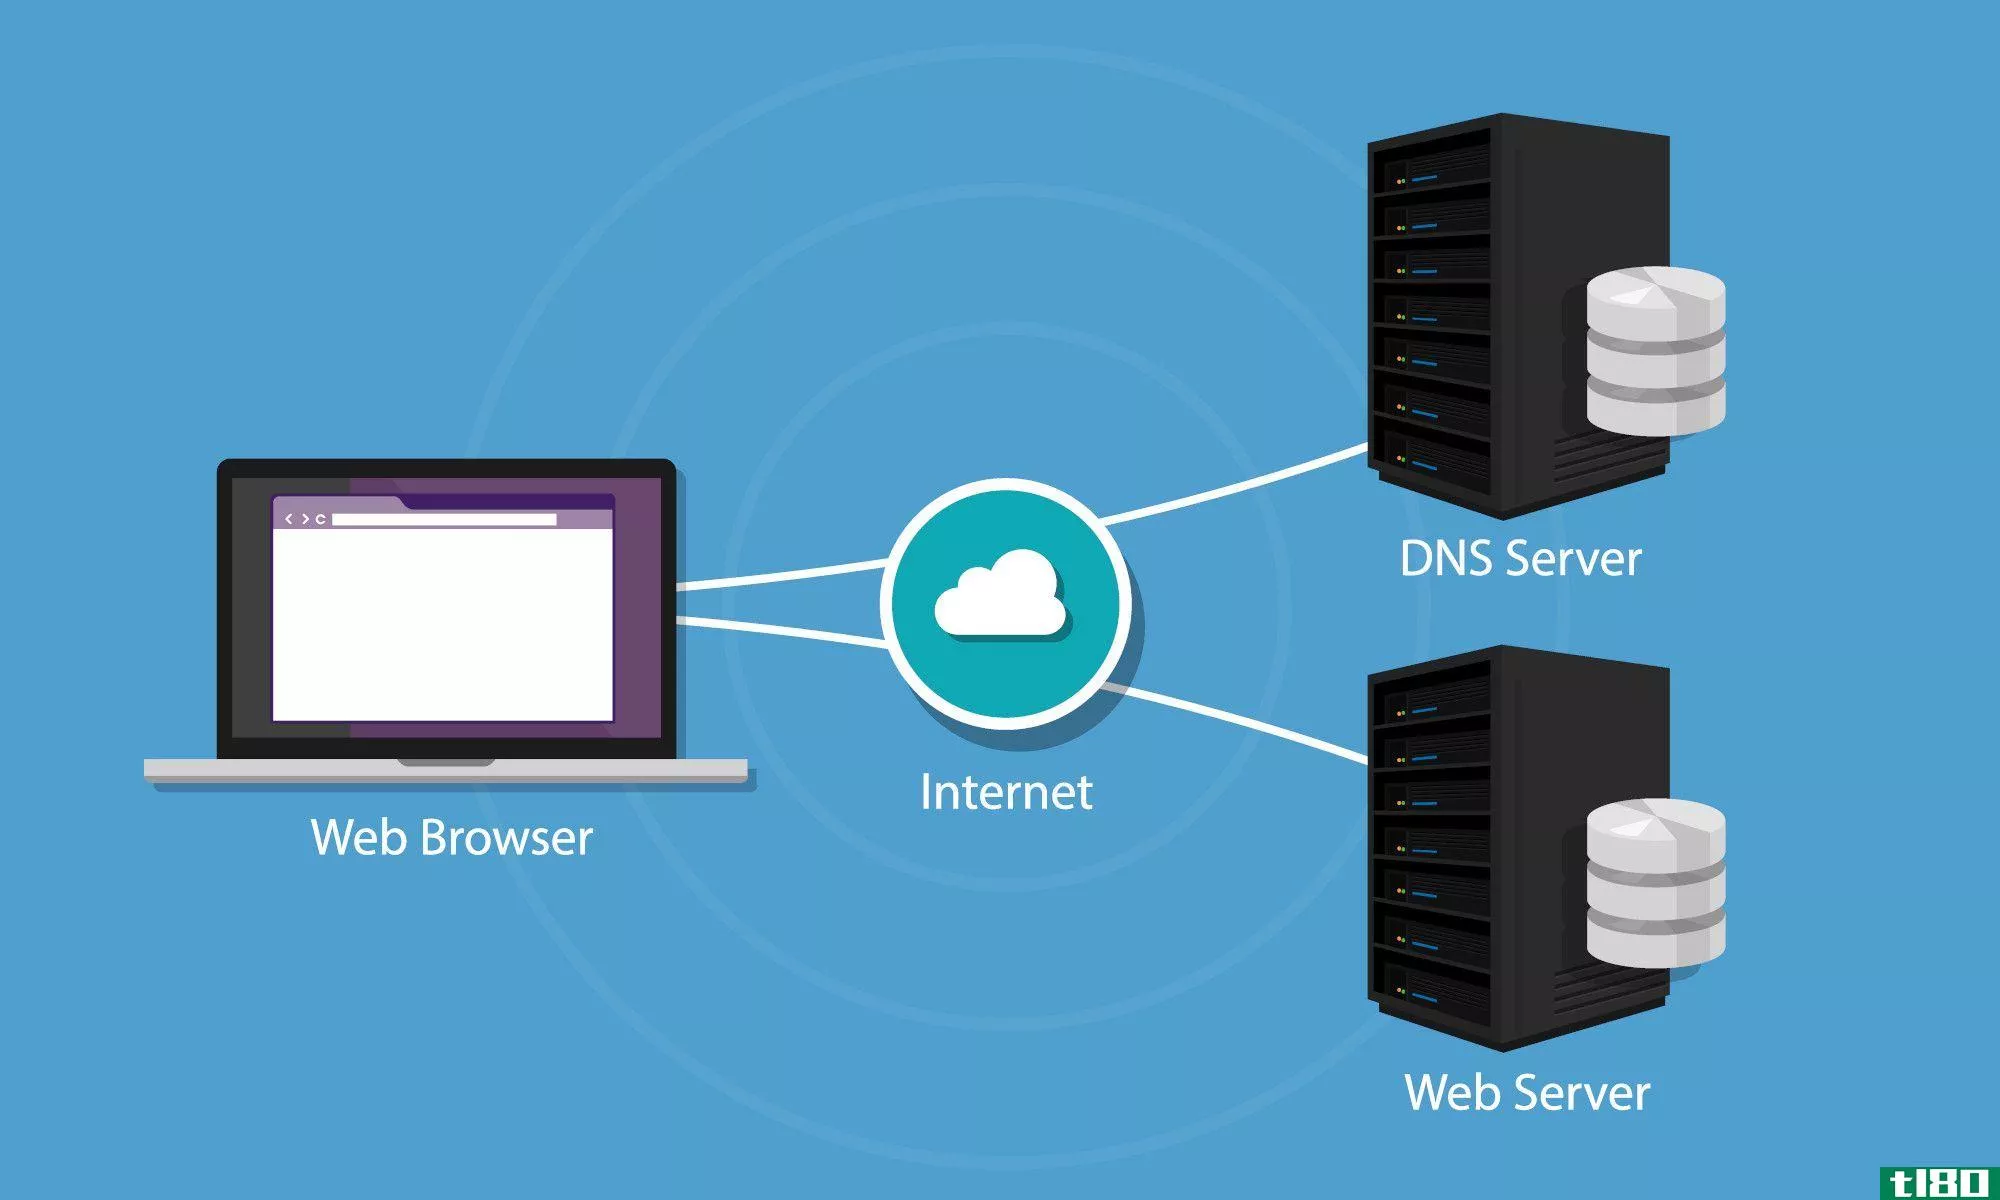 An example of a DNS server